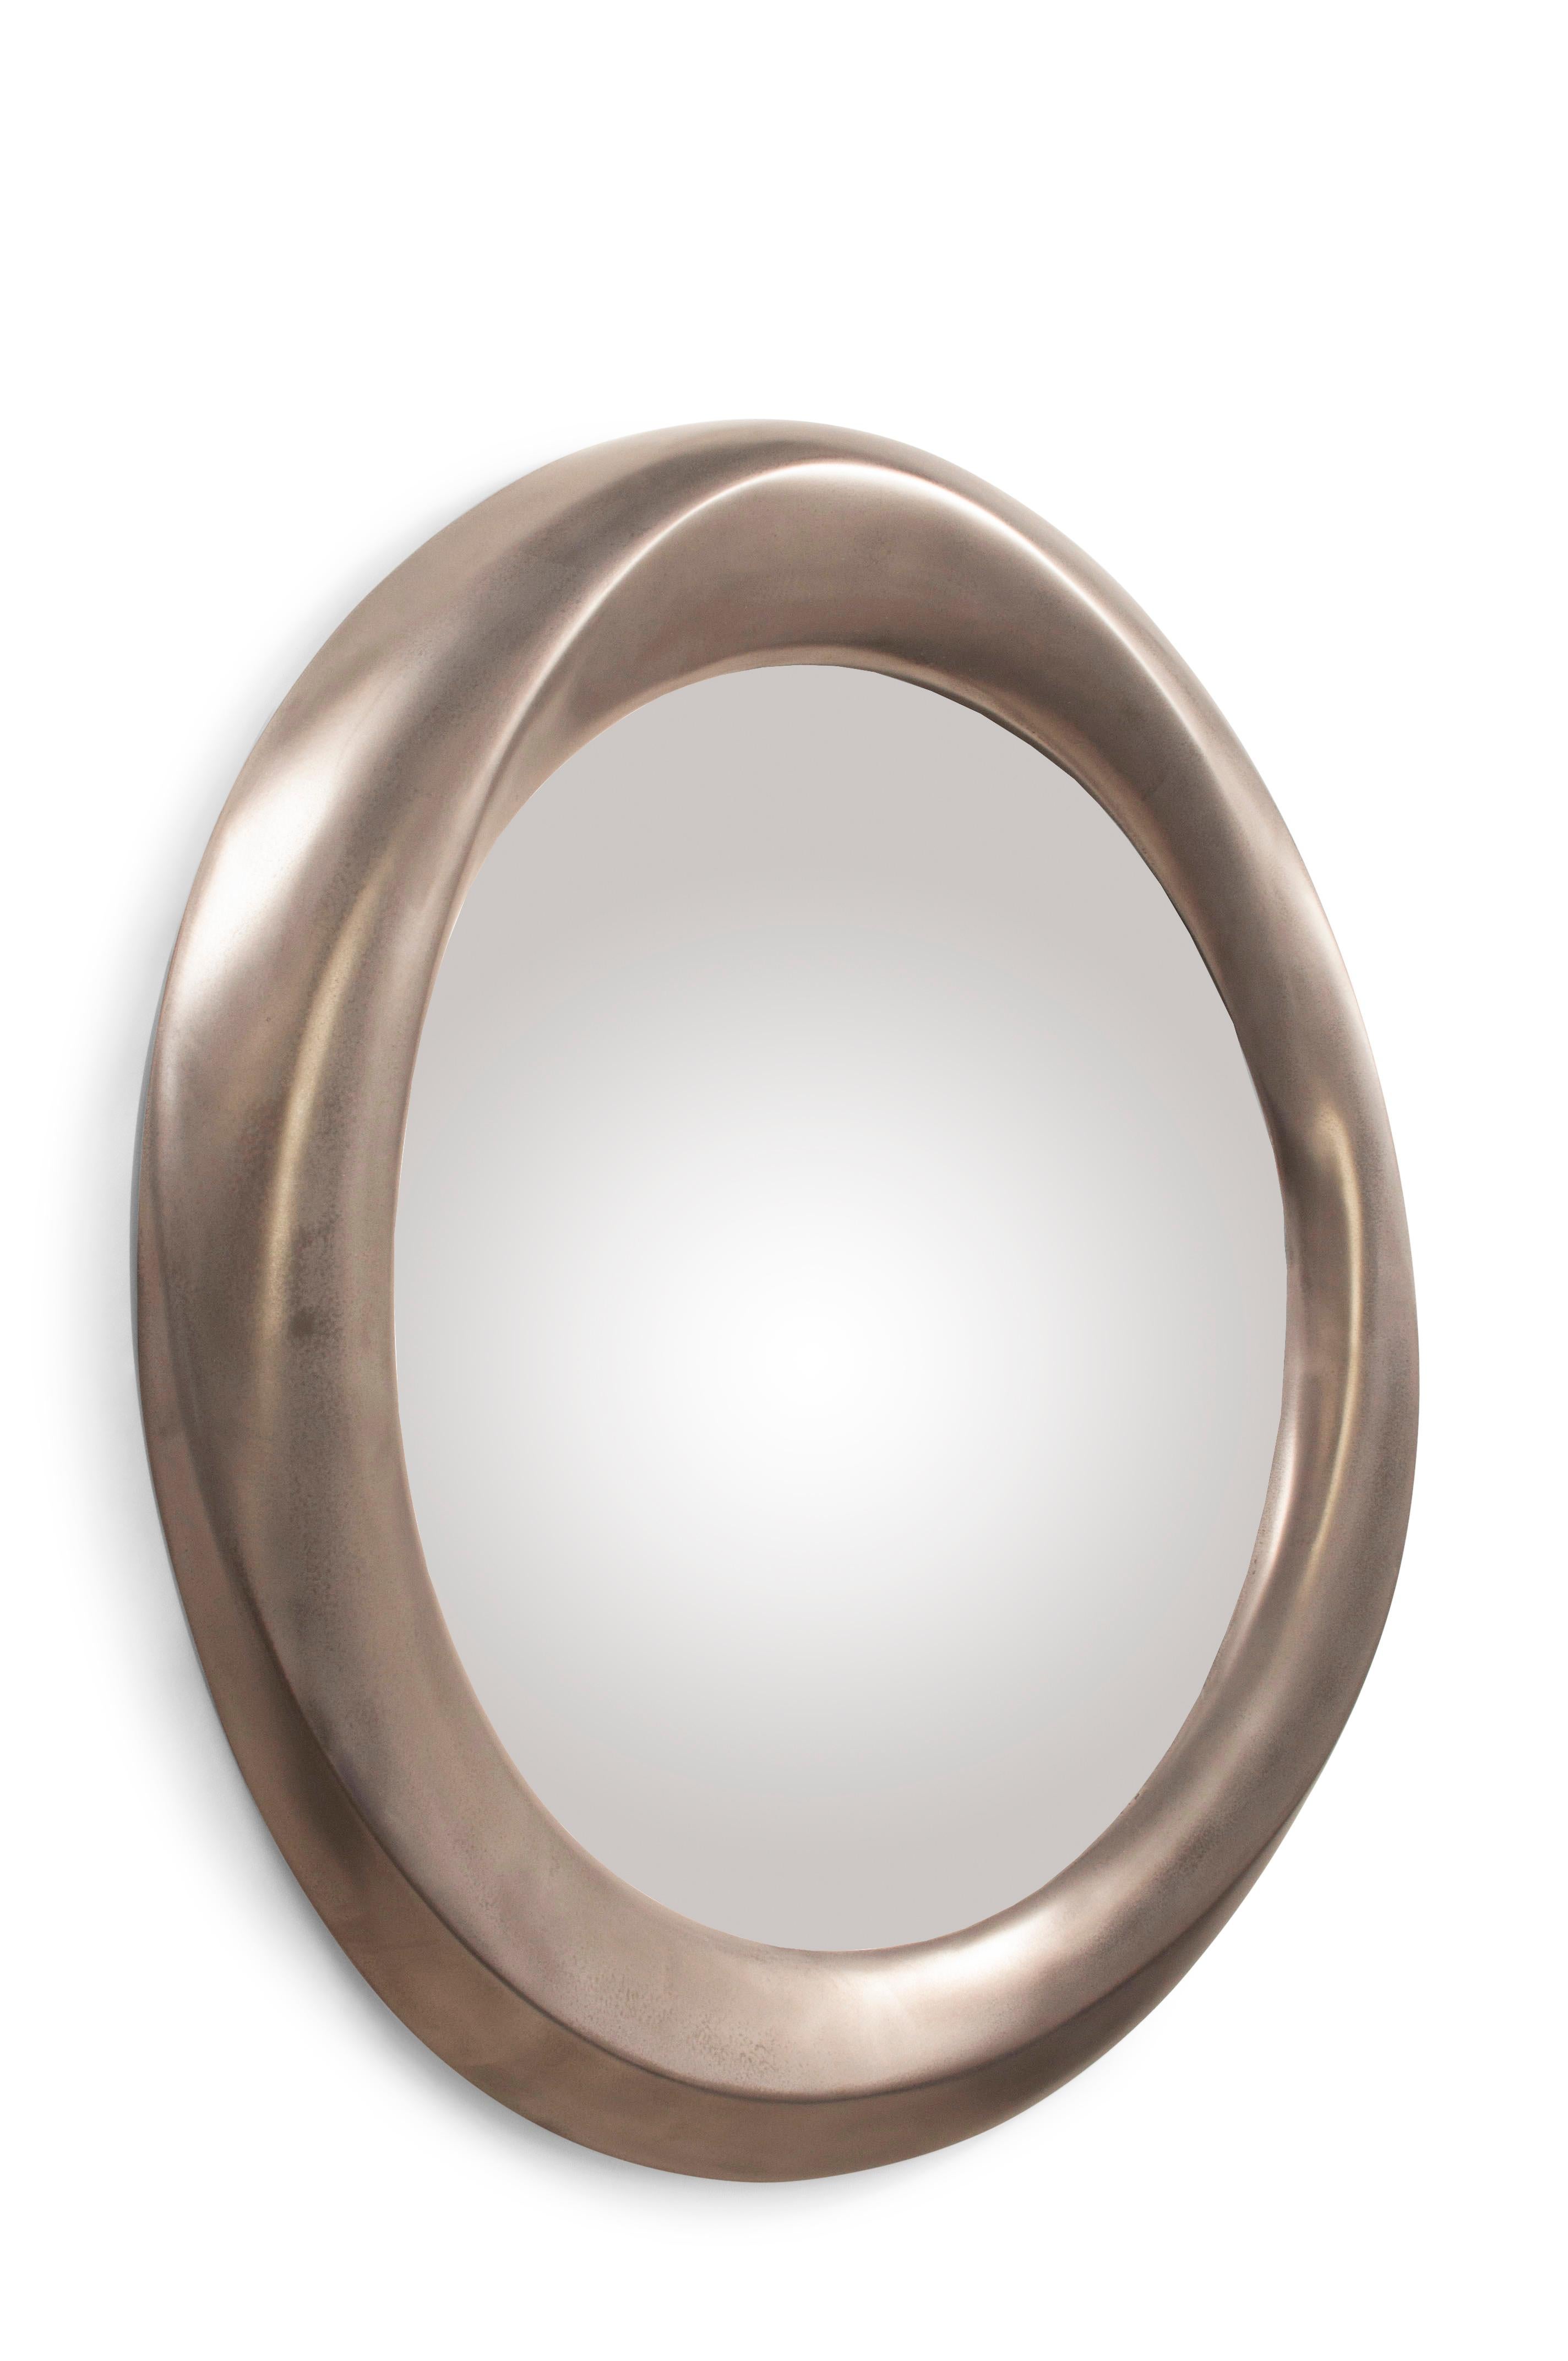 Modern Amorph Chiara Mirror in Stainless Steel Finish